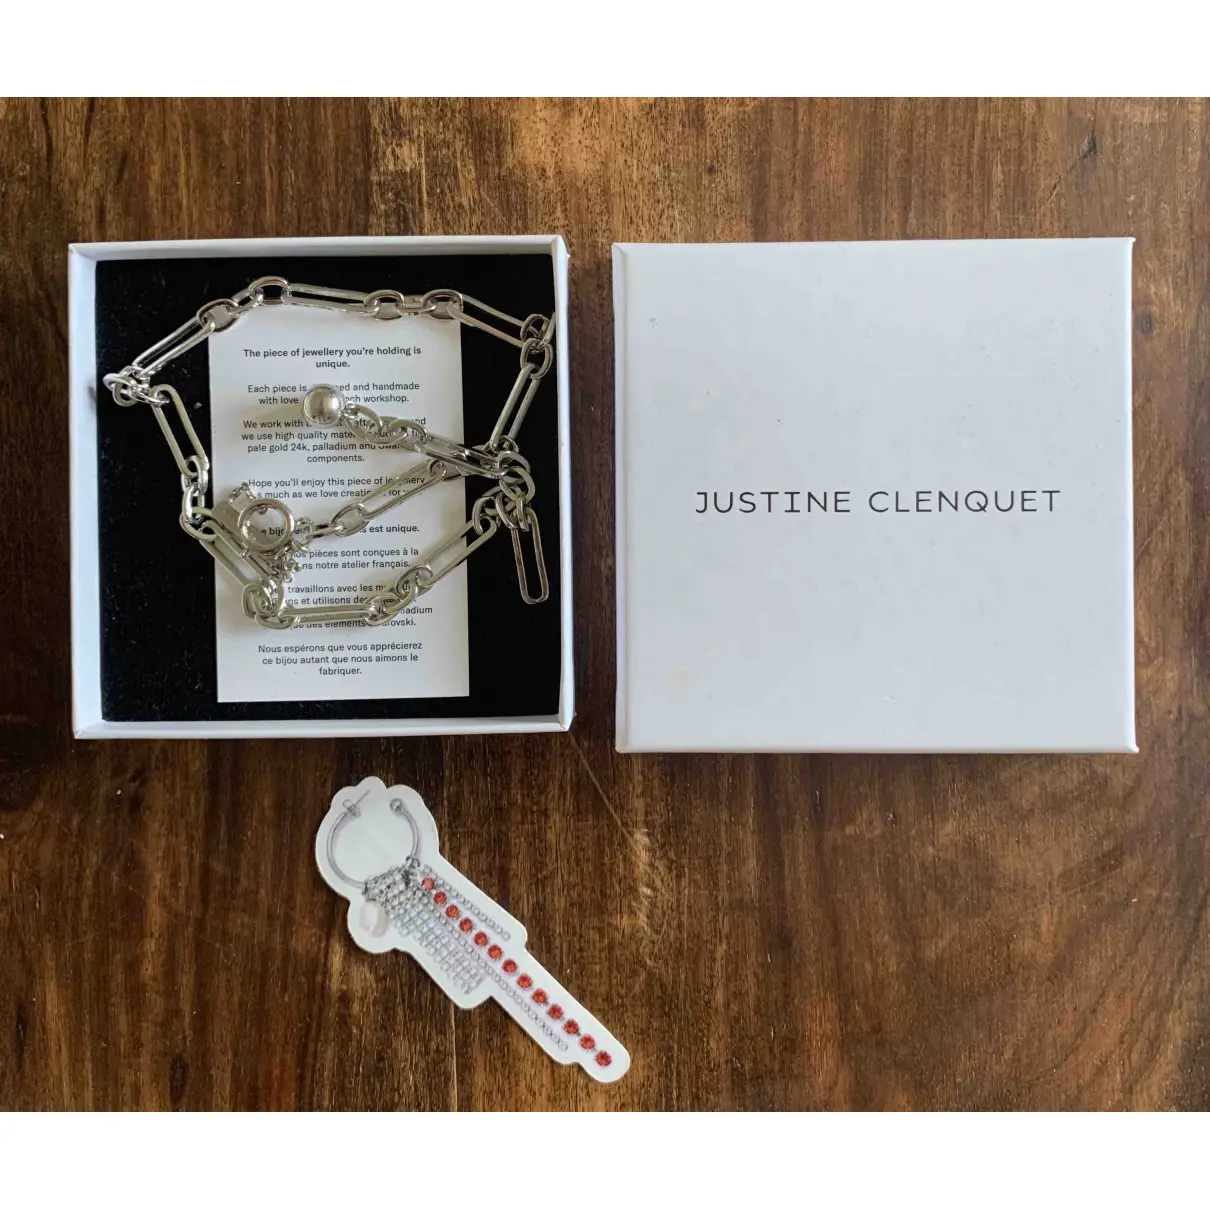 Buy Justine Clenquet Necklace online